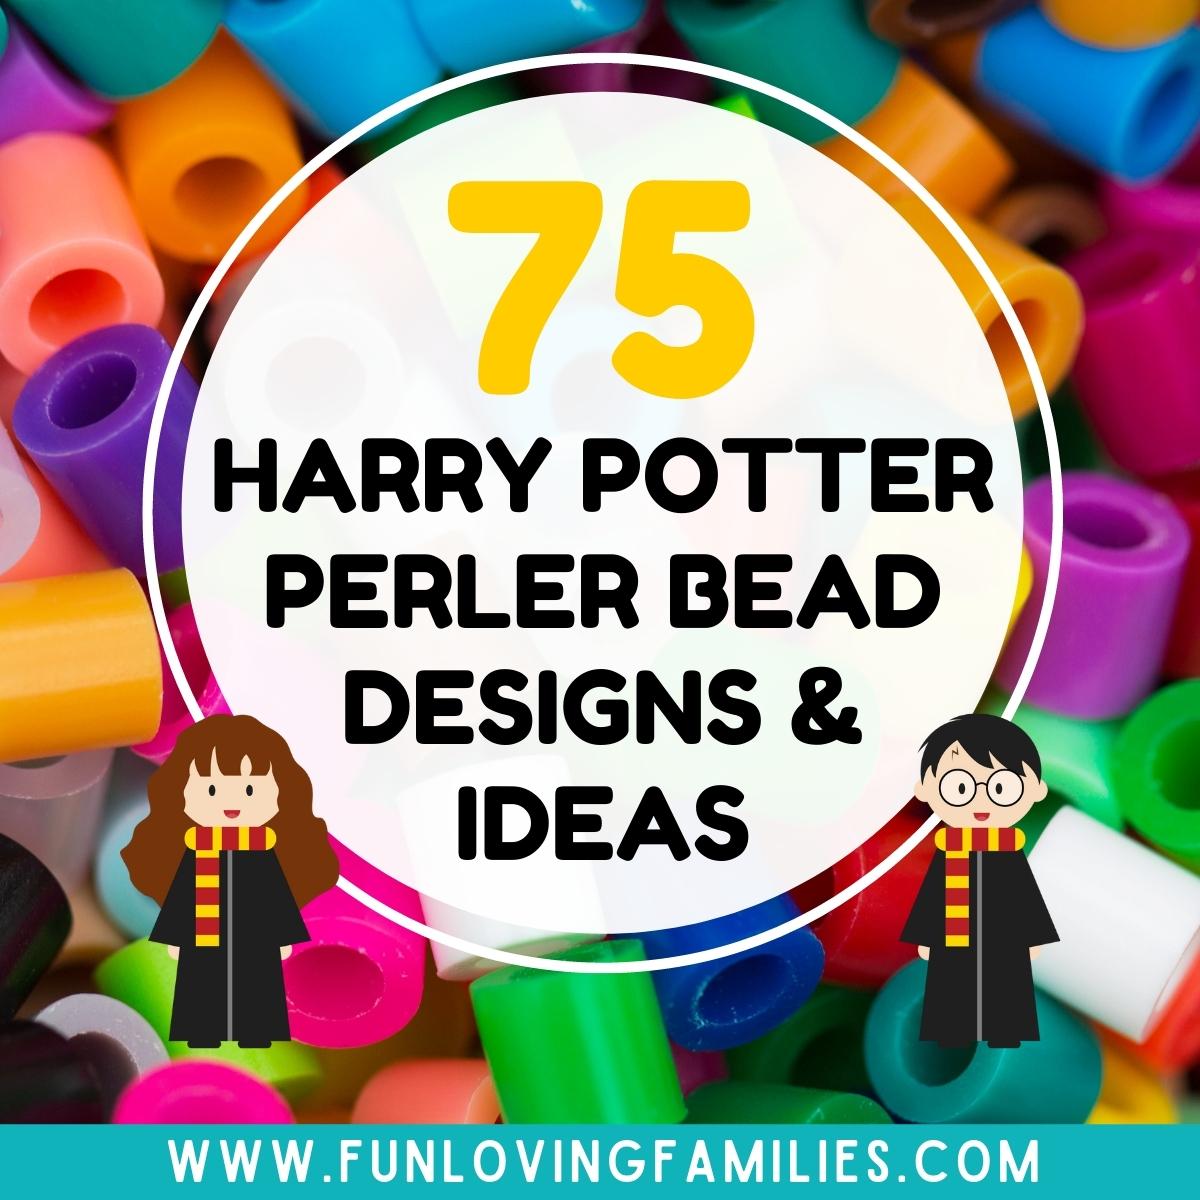 Harry Potter Perler Bead Patterns